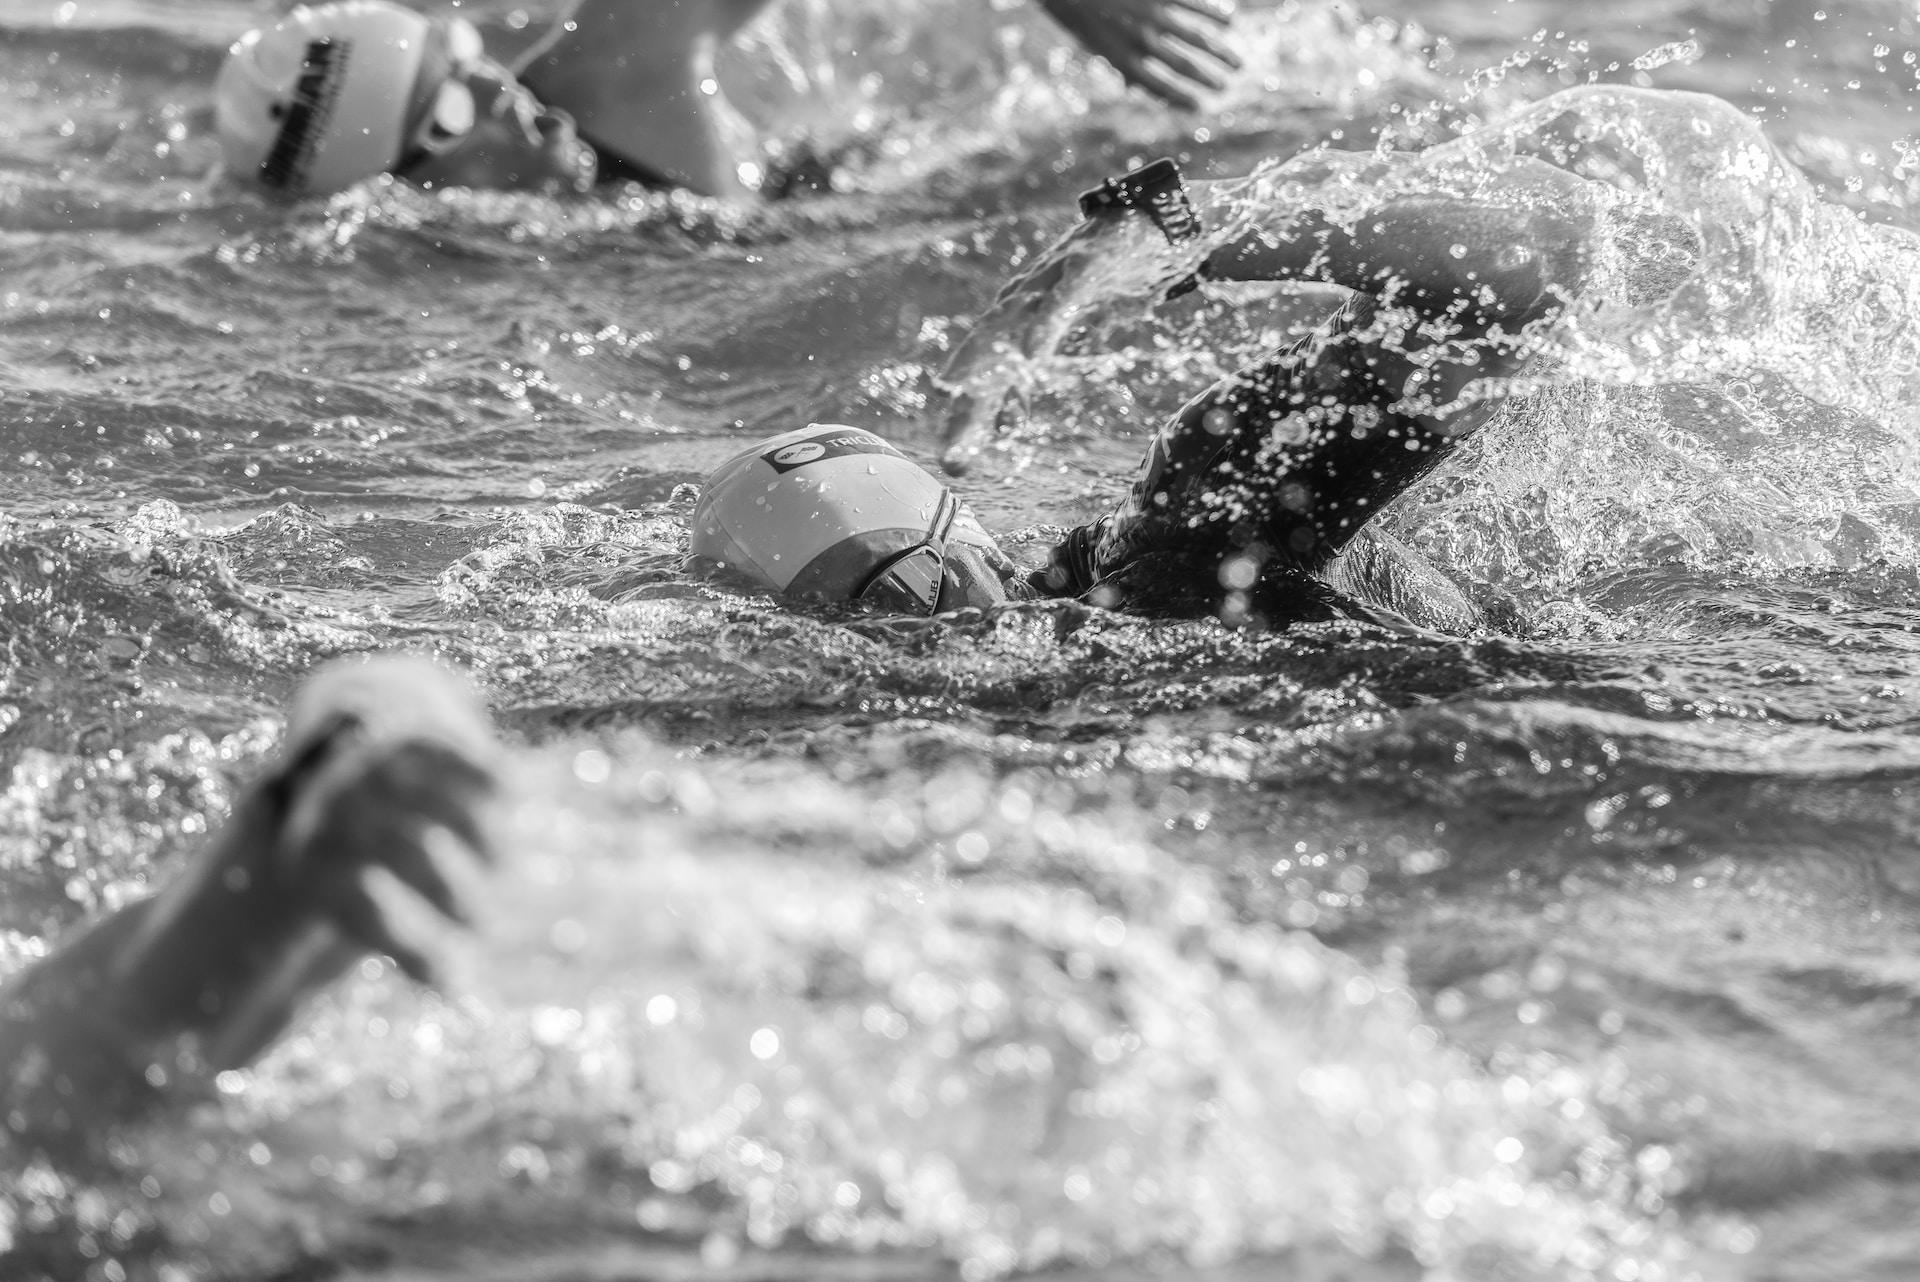 the image shows triathlon swimming race